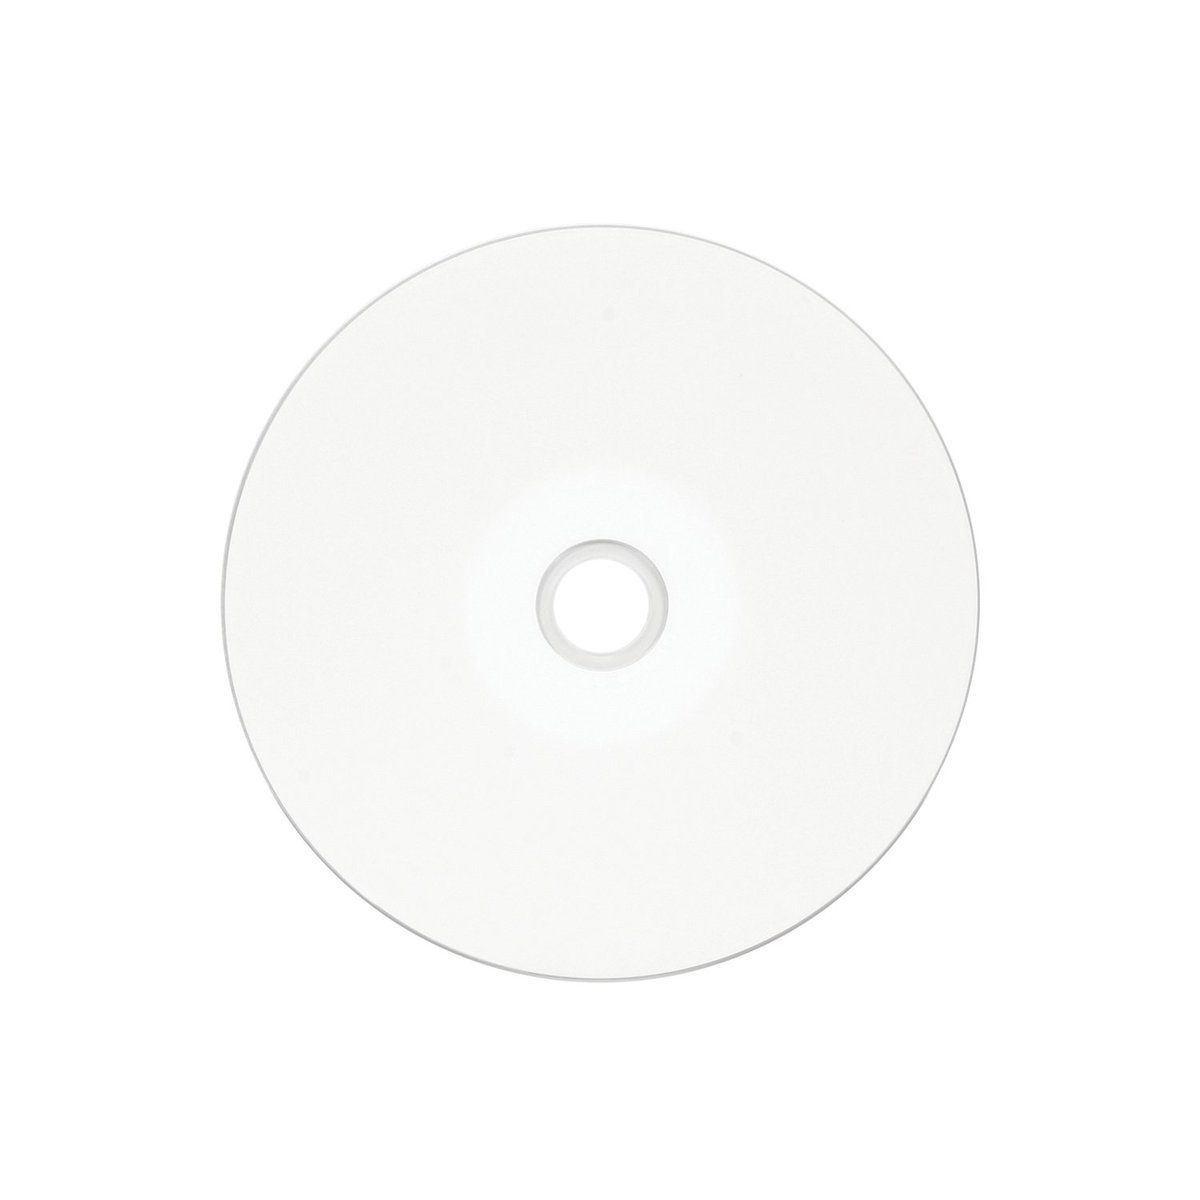 Verbatim DVD-R Blank Discs 4.7GB 16X DataLifePlus White Inkjet Printable Recordable Disc Hub Printable - 50pk Spindle 95079